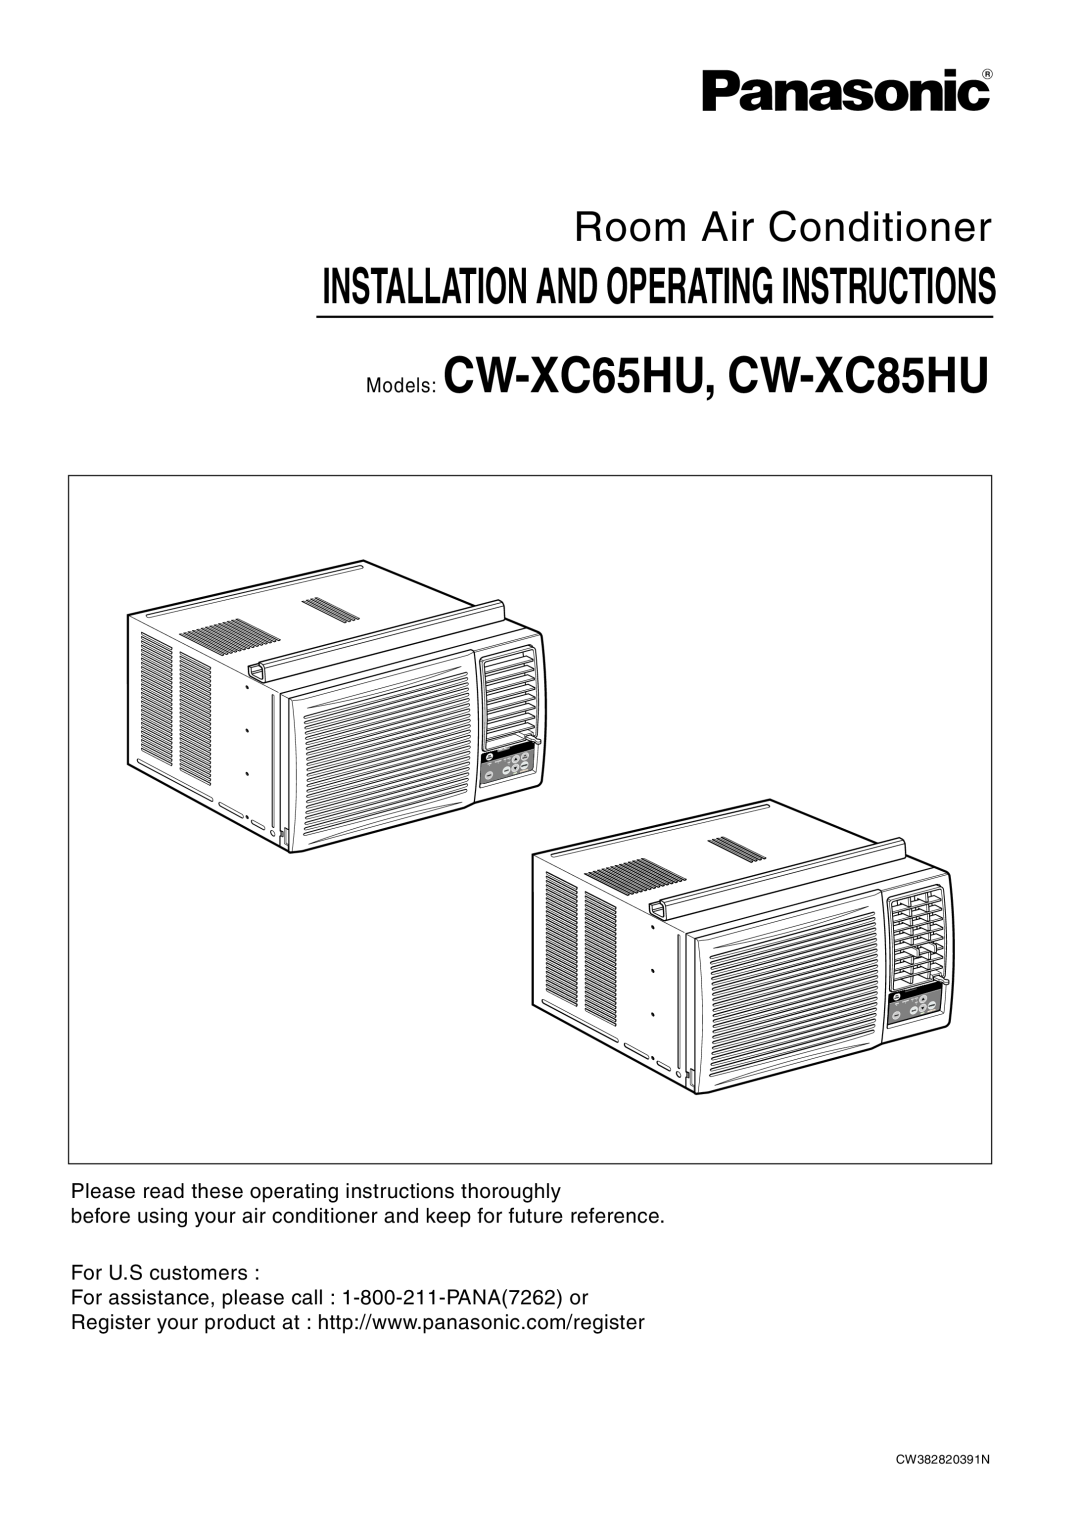 Panasonic manual Models CW-XC65HU, CW-XC85HU, Room Air Conditioner, Installation And Operating Instructions 